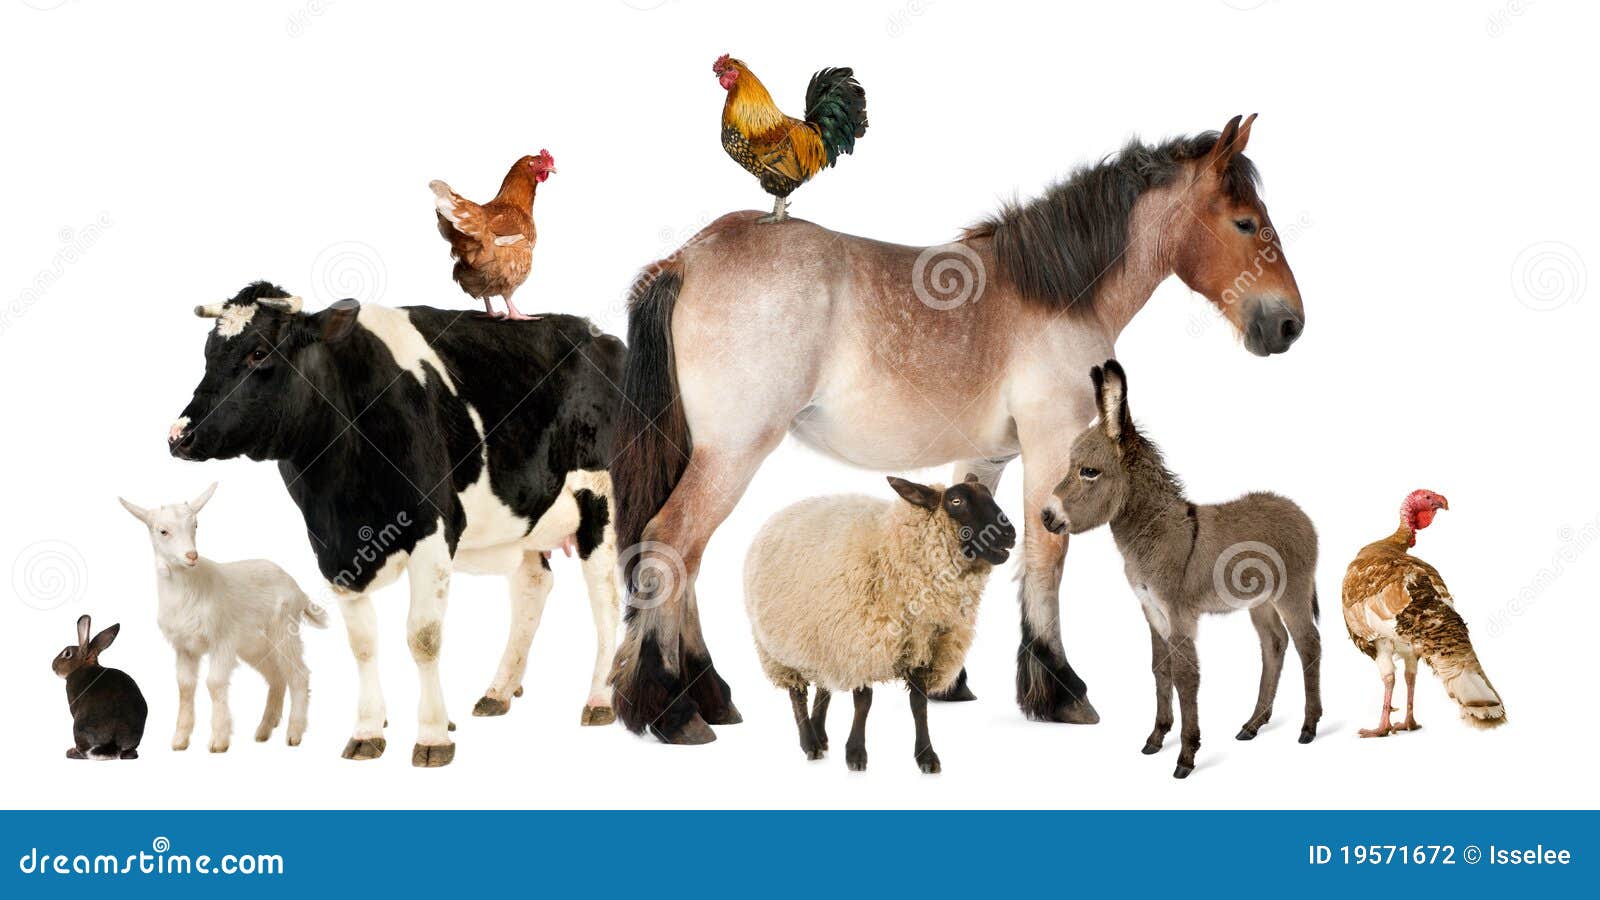 variety of farm animals